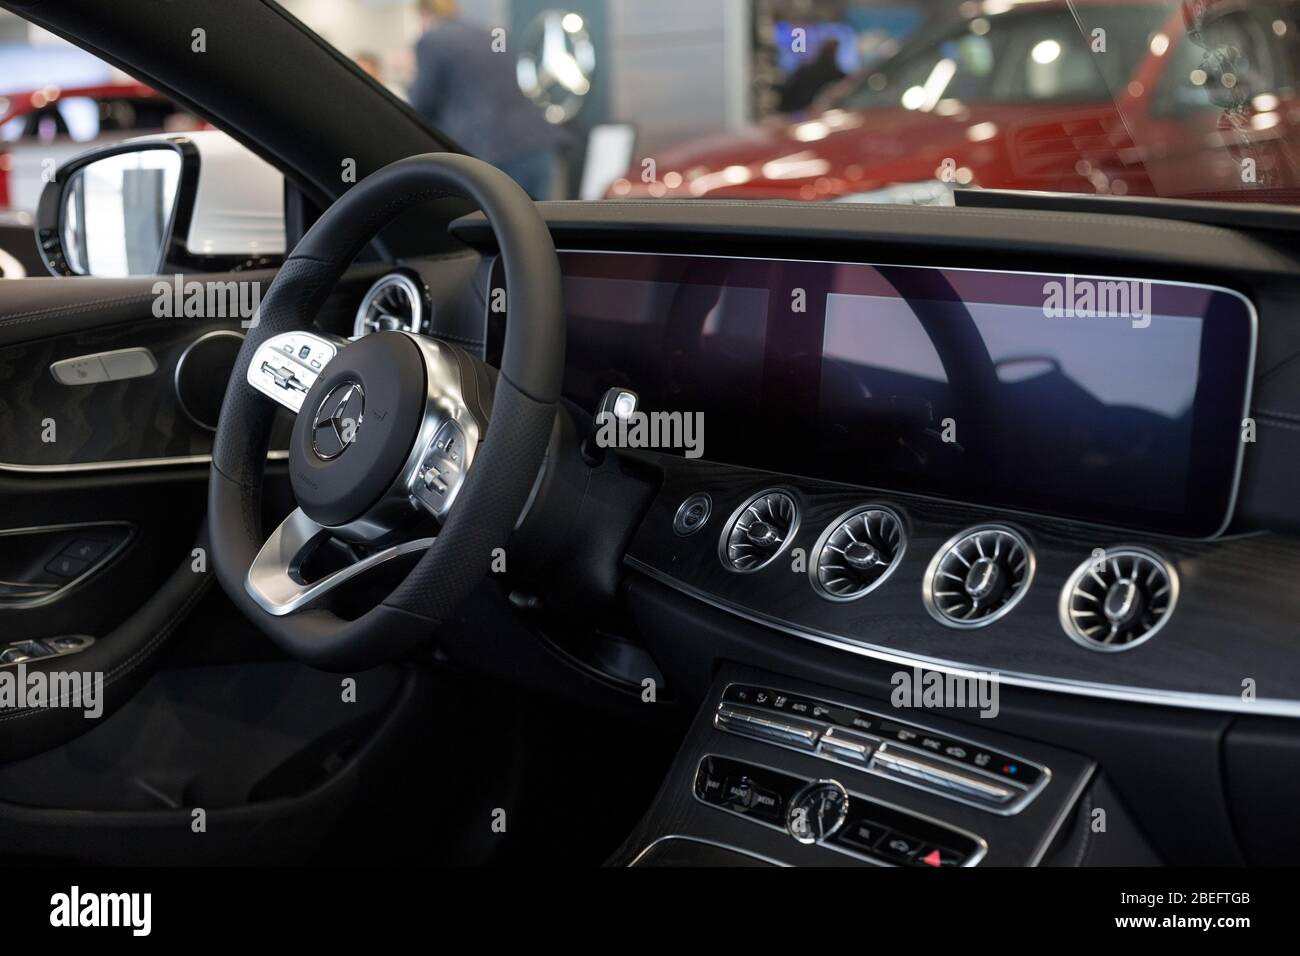 Russia, Izhevsk - February 20, 2020: Mercedes-Benz showroom. Interior of new modern E 200 coupe car. Famous world brand. Prestigious vehicles. Stock Photo